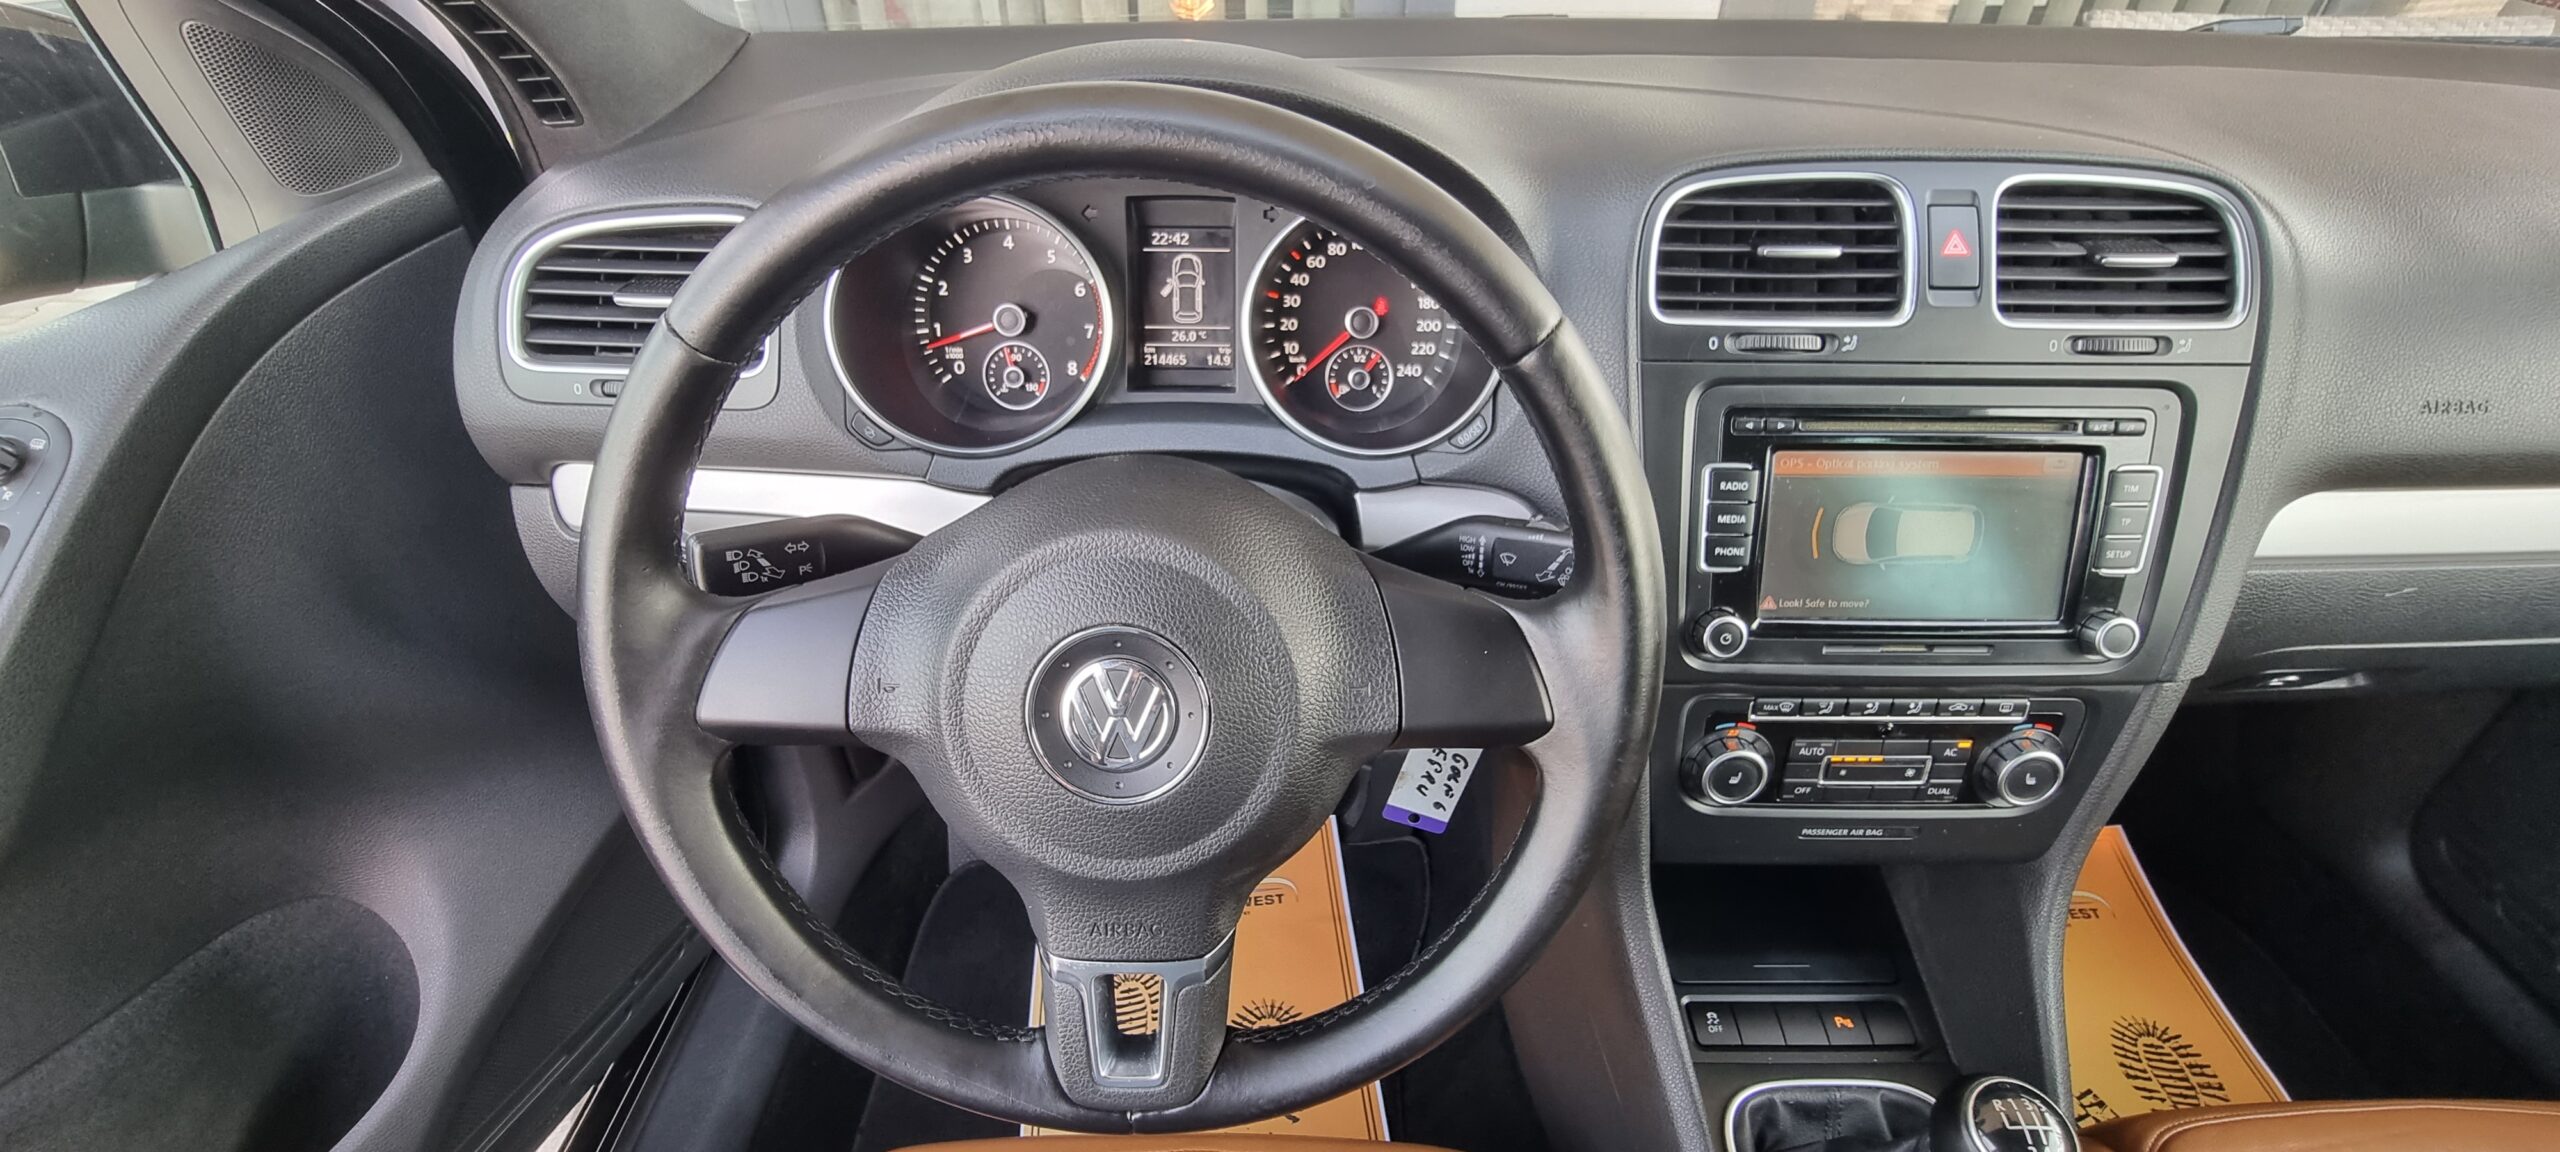 VW GOLF 6 , 1.4 BENZINA, 160 CP, EURO 5, AN 2011